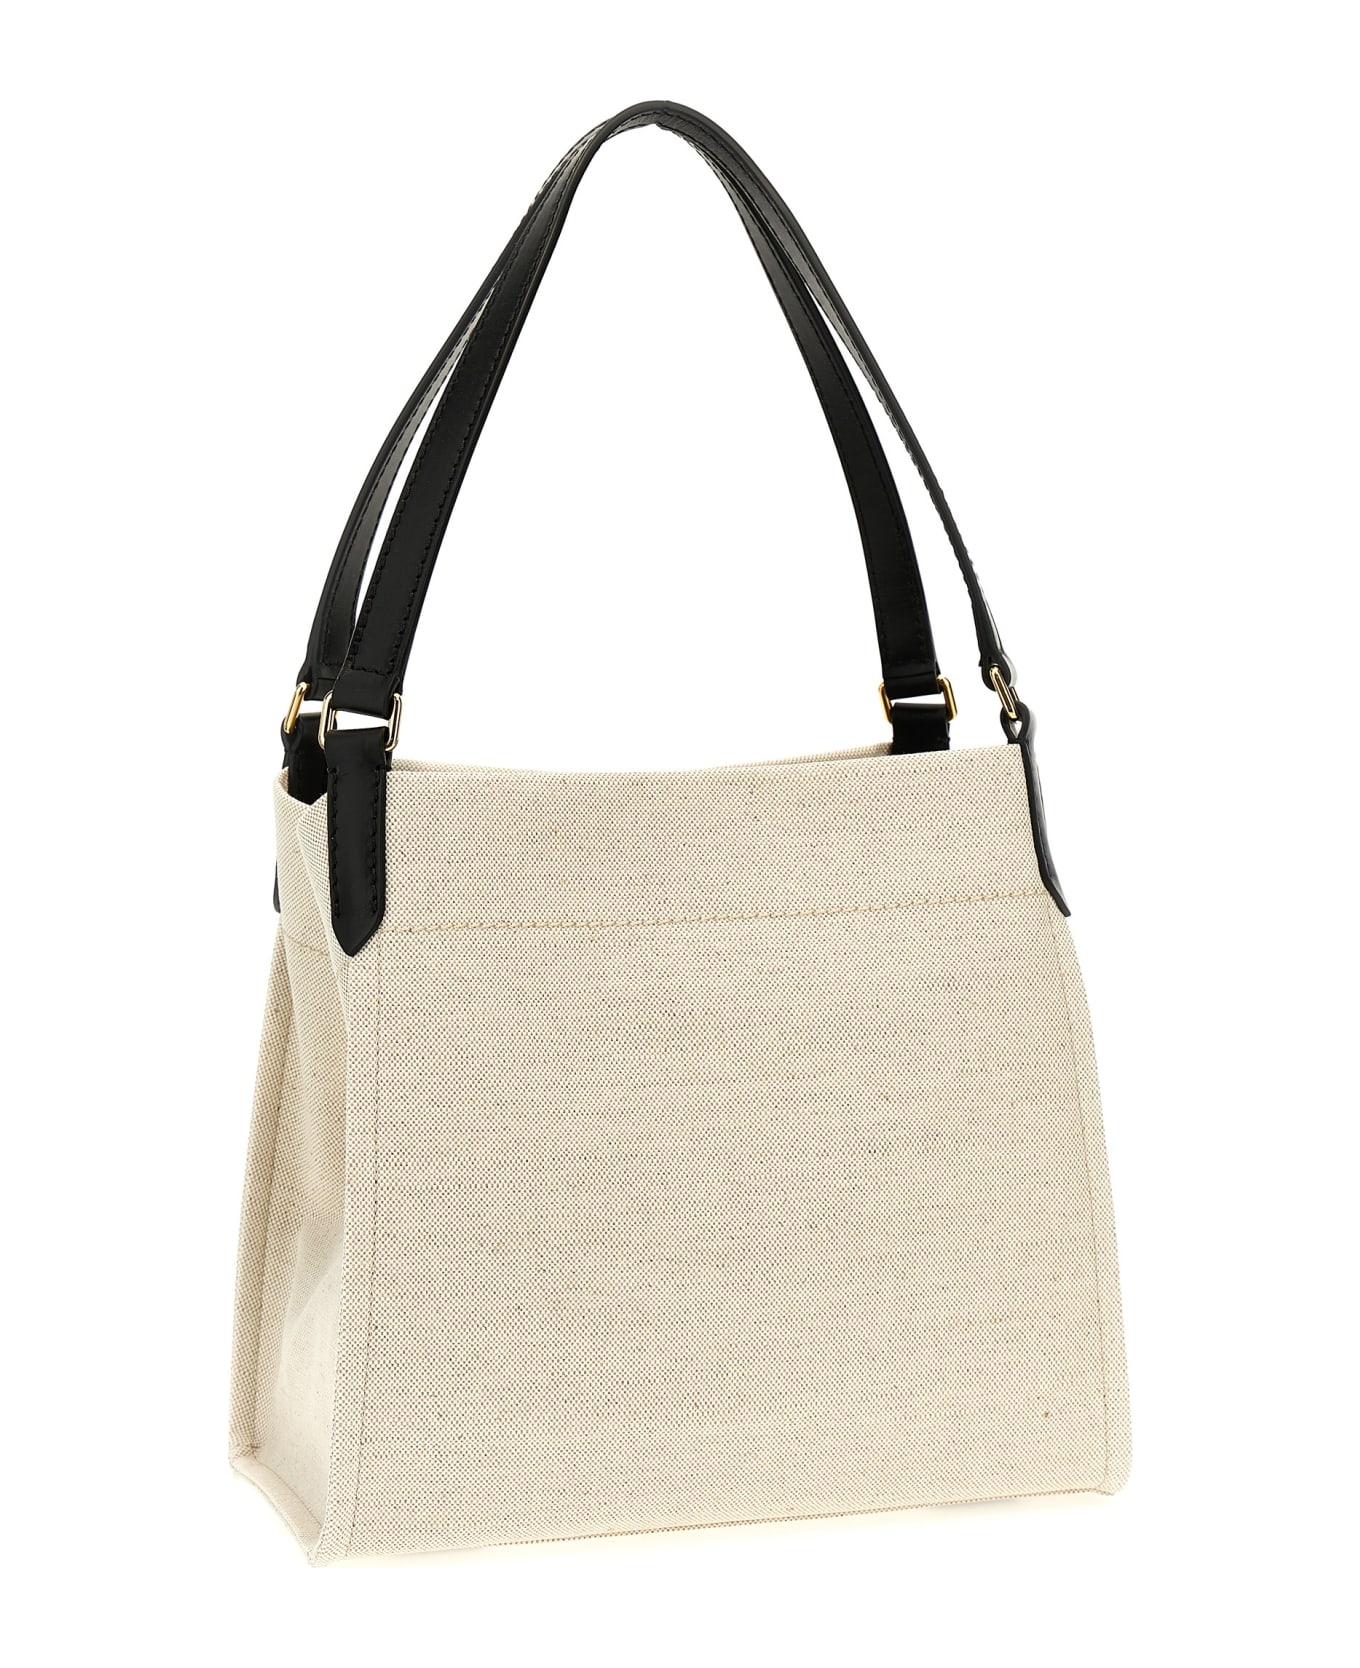 Tom Ford 'amalfi Medium' Shopping Bag - White/Black